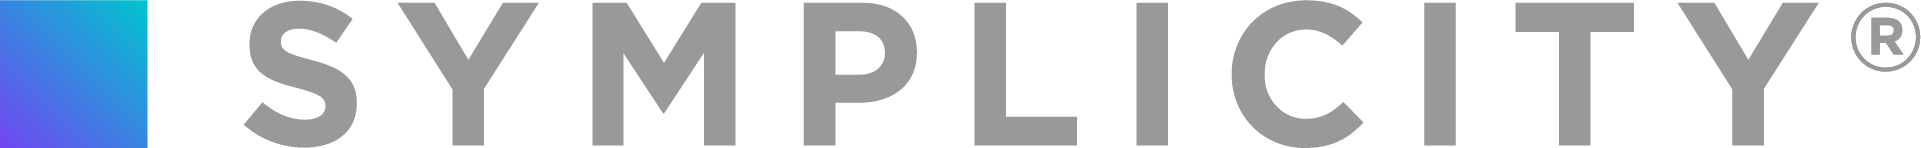 logo_digital_symplicity_reg_gradient-sq-3